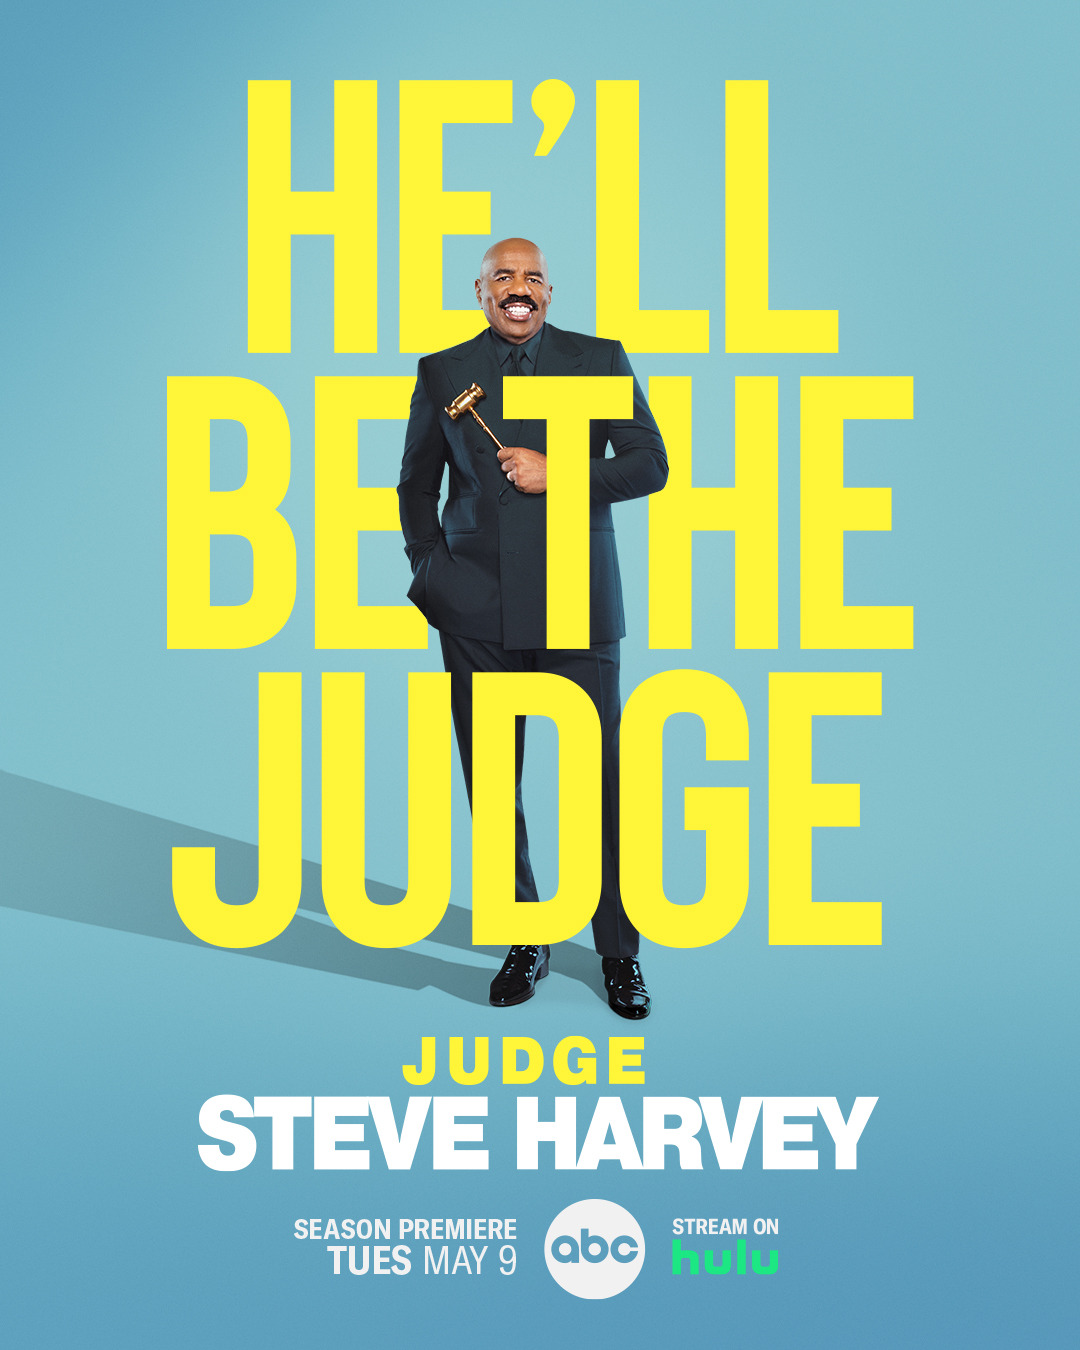 Extra Large TV Poster Image for Judge Steve Harvey 